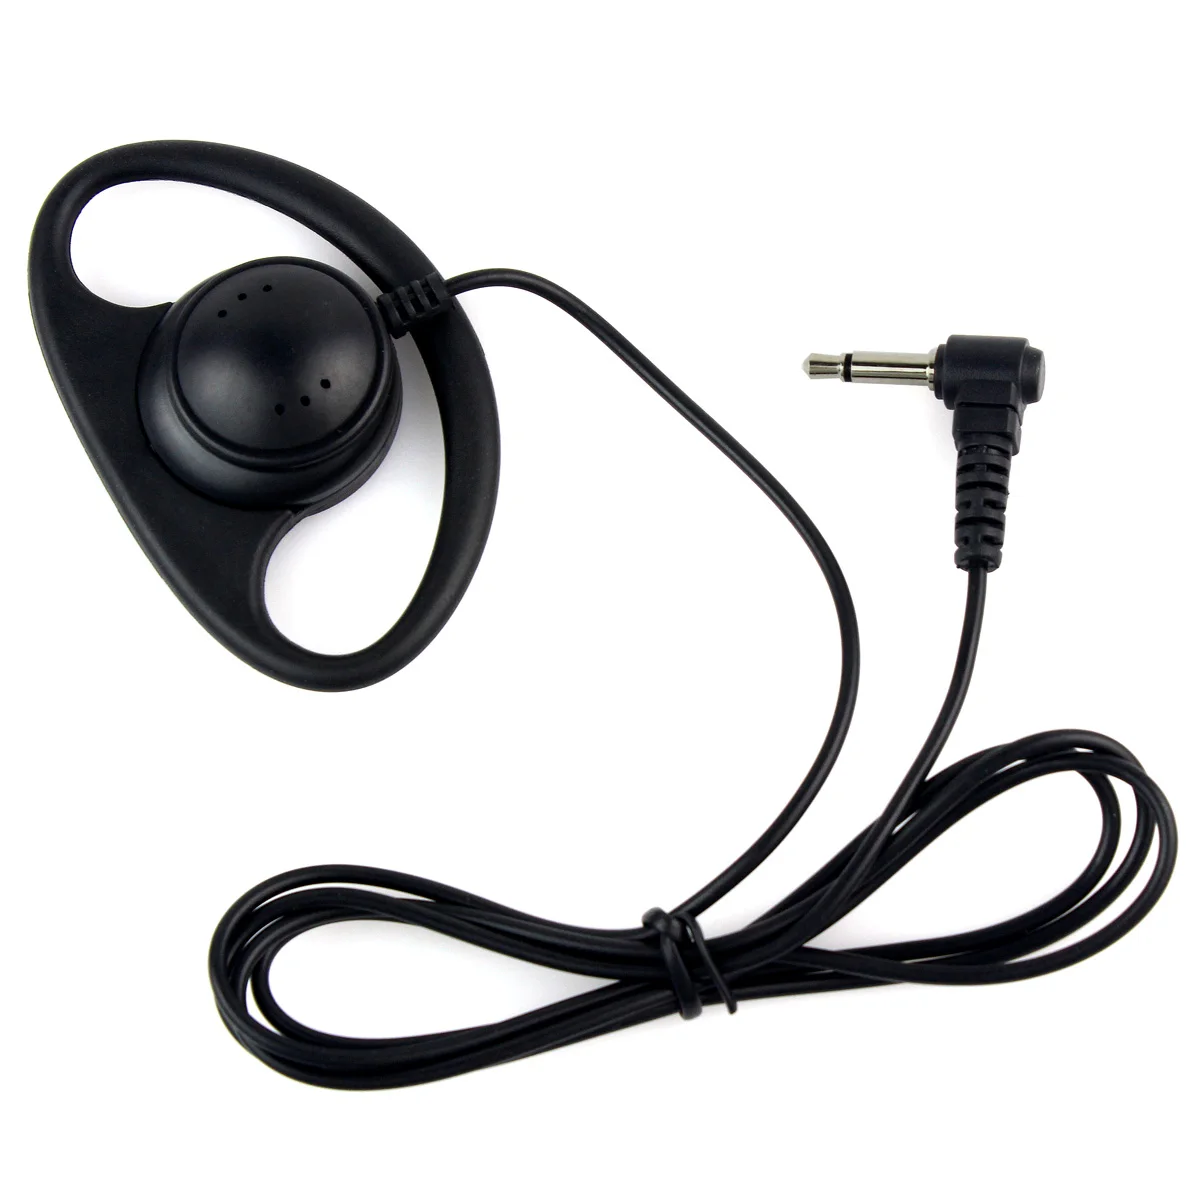 

New 1-Pin 3.5mm Jack D-Shape Listen Only Soft Rubber Earpiece Headset for Two Way Radios Walkie Talkie